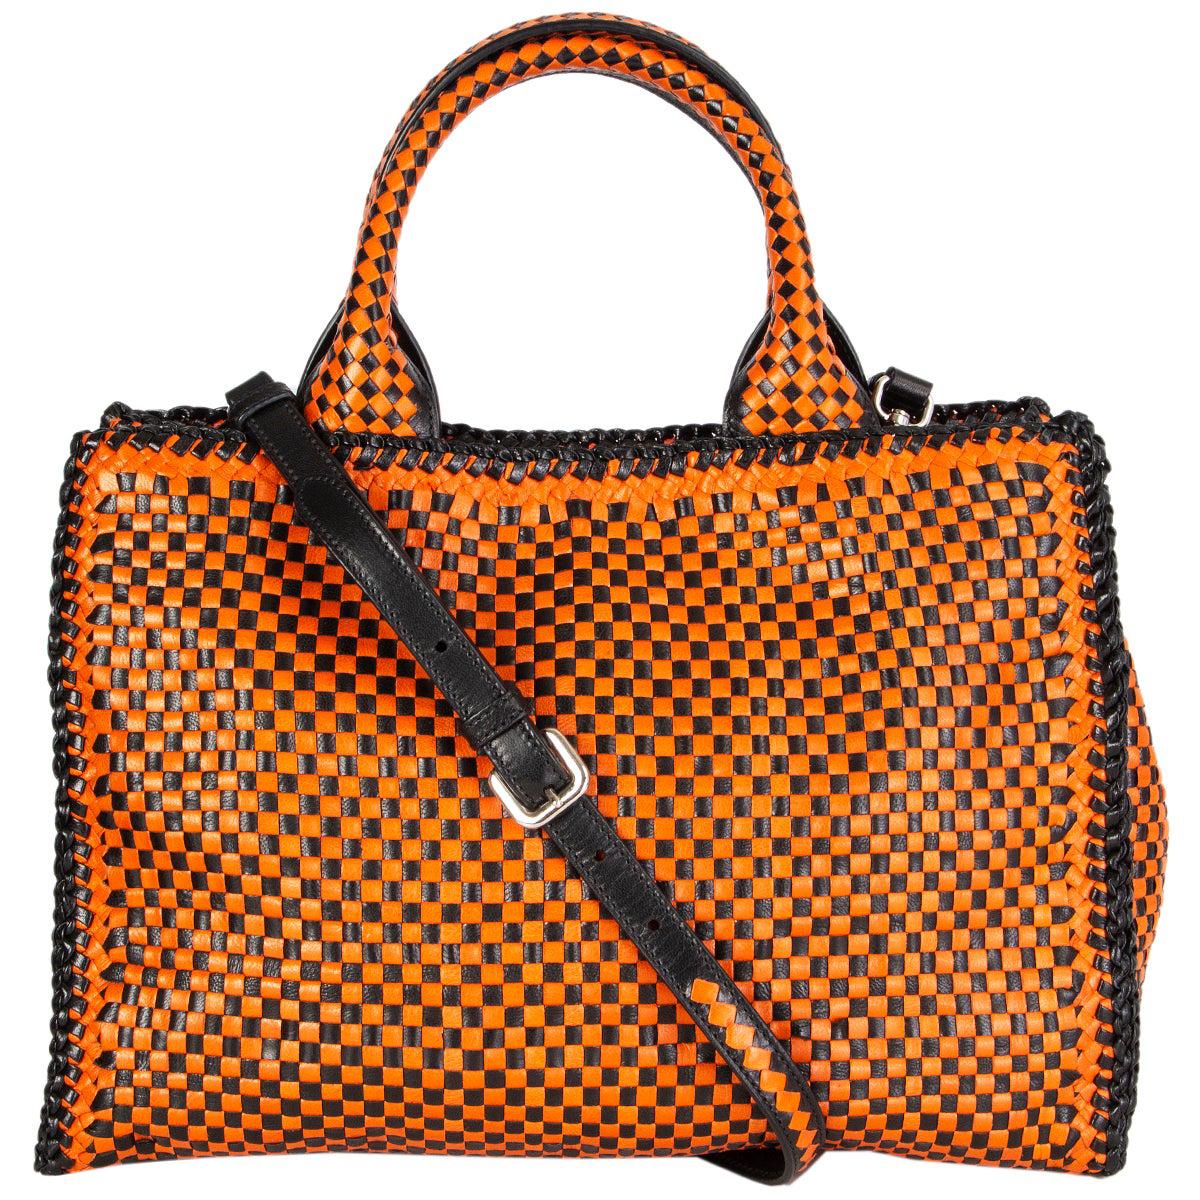 PRADA orange & black woven leather MADRAS Tote Shoulder Bag